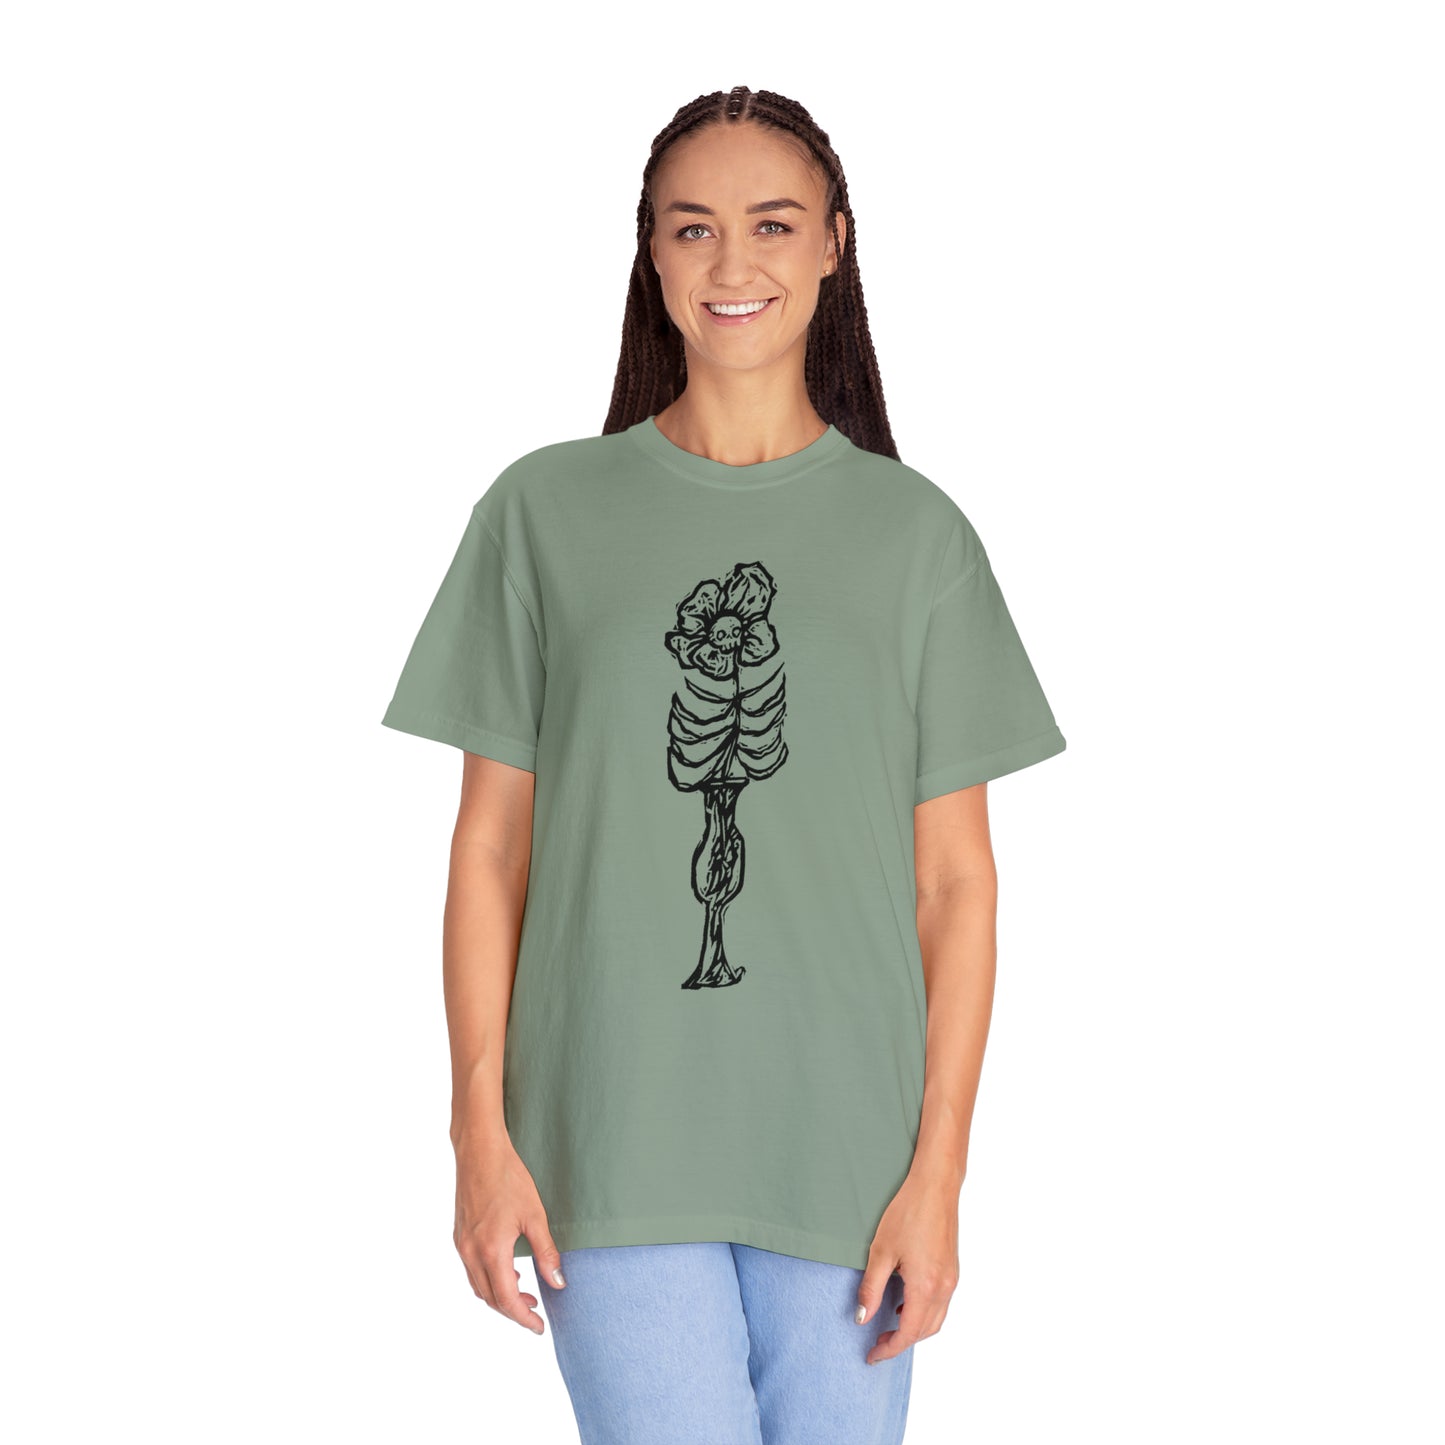 Creepy Flower Skull Halloween T-Shirt - Comfort Colors T-Shirt for Spooky Season and Goblincore Aesthetic